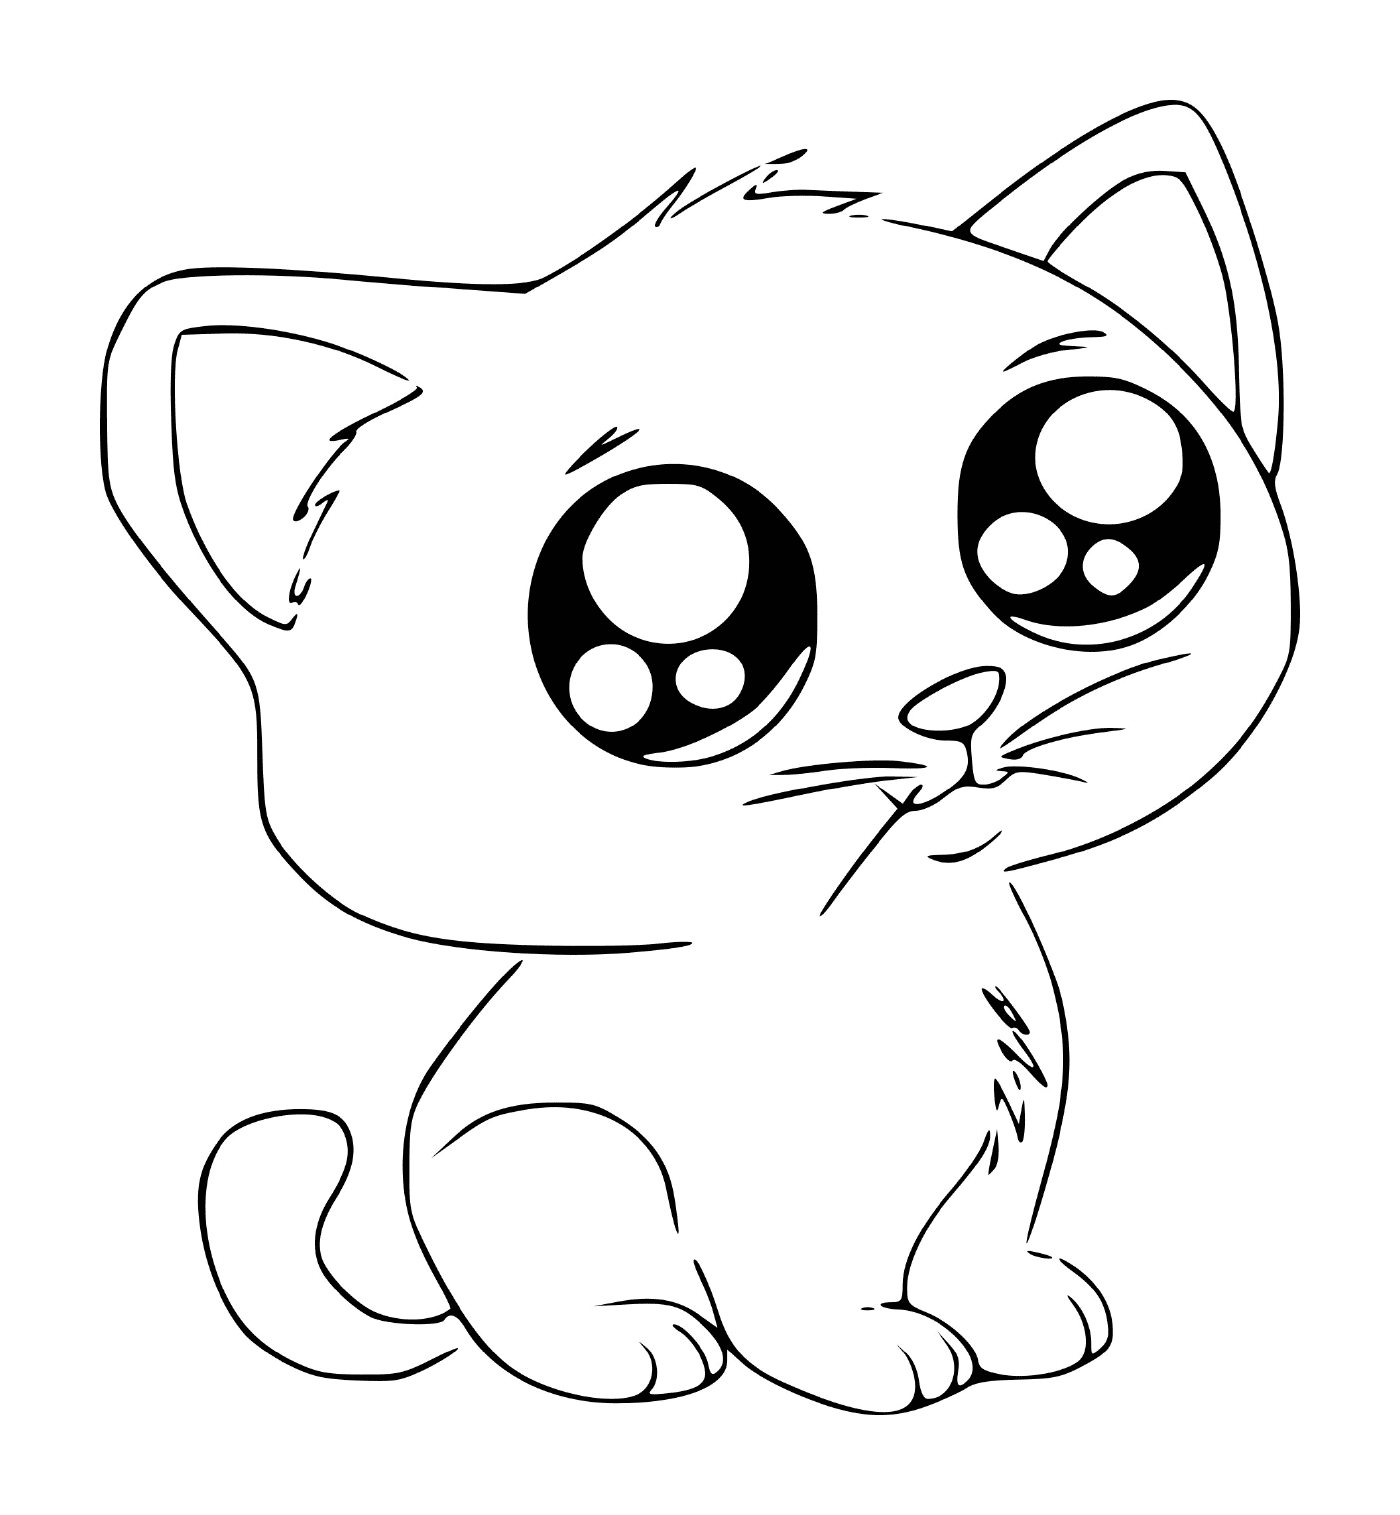  A cute kawaii cat 